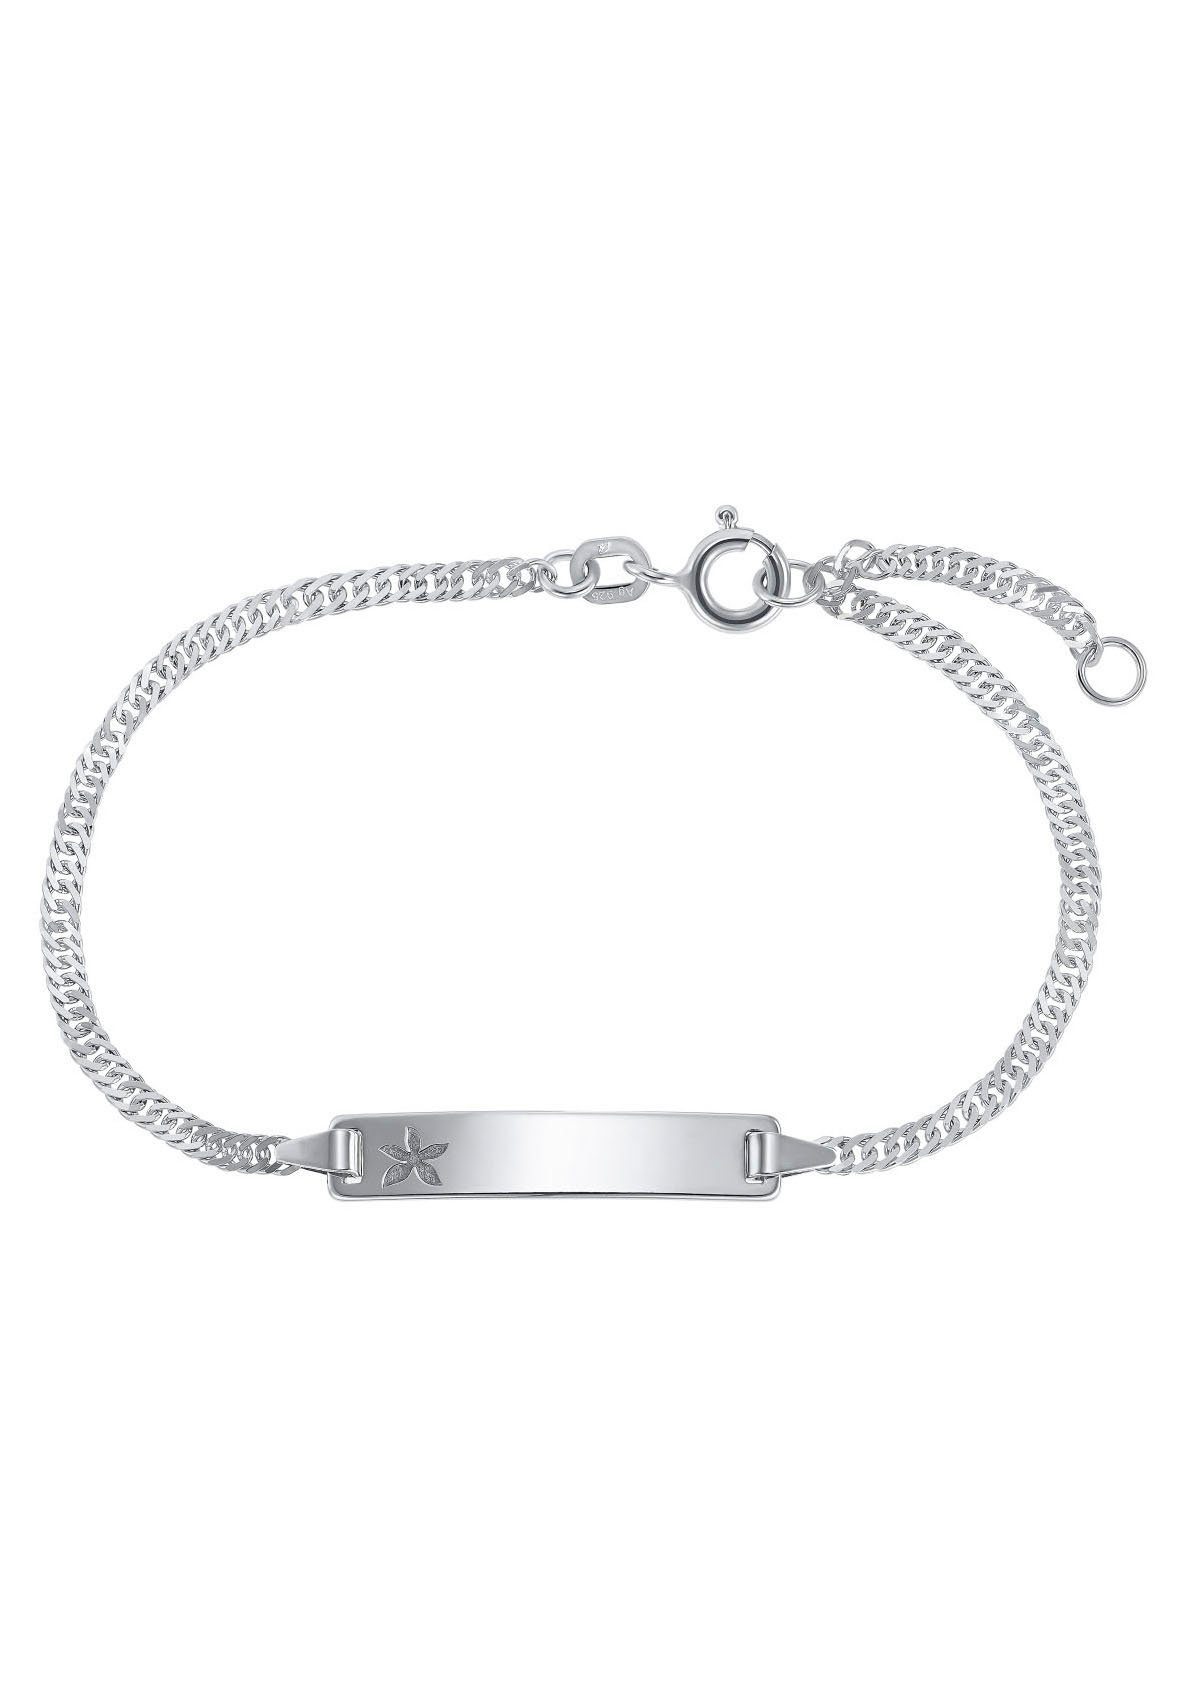 Germany in Made Bracelet, Amor Armband 2016489, Ident ID